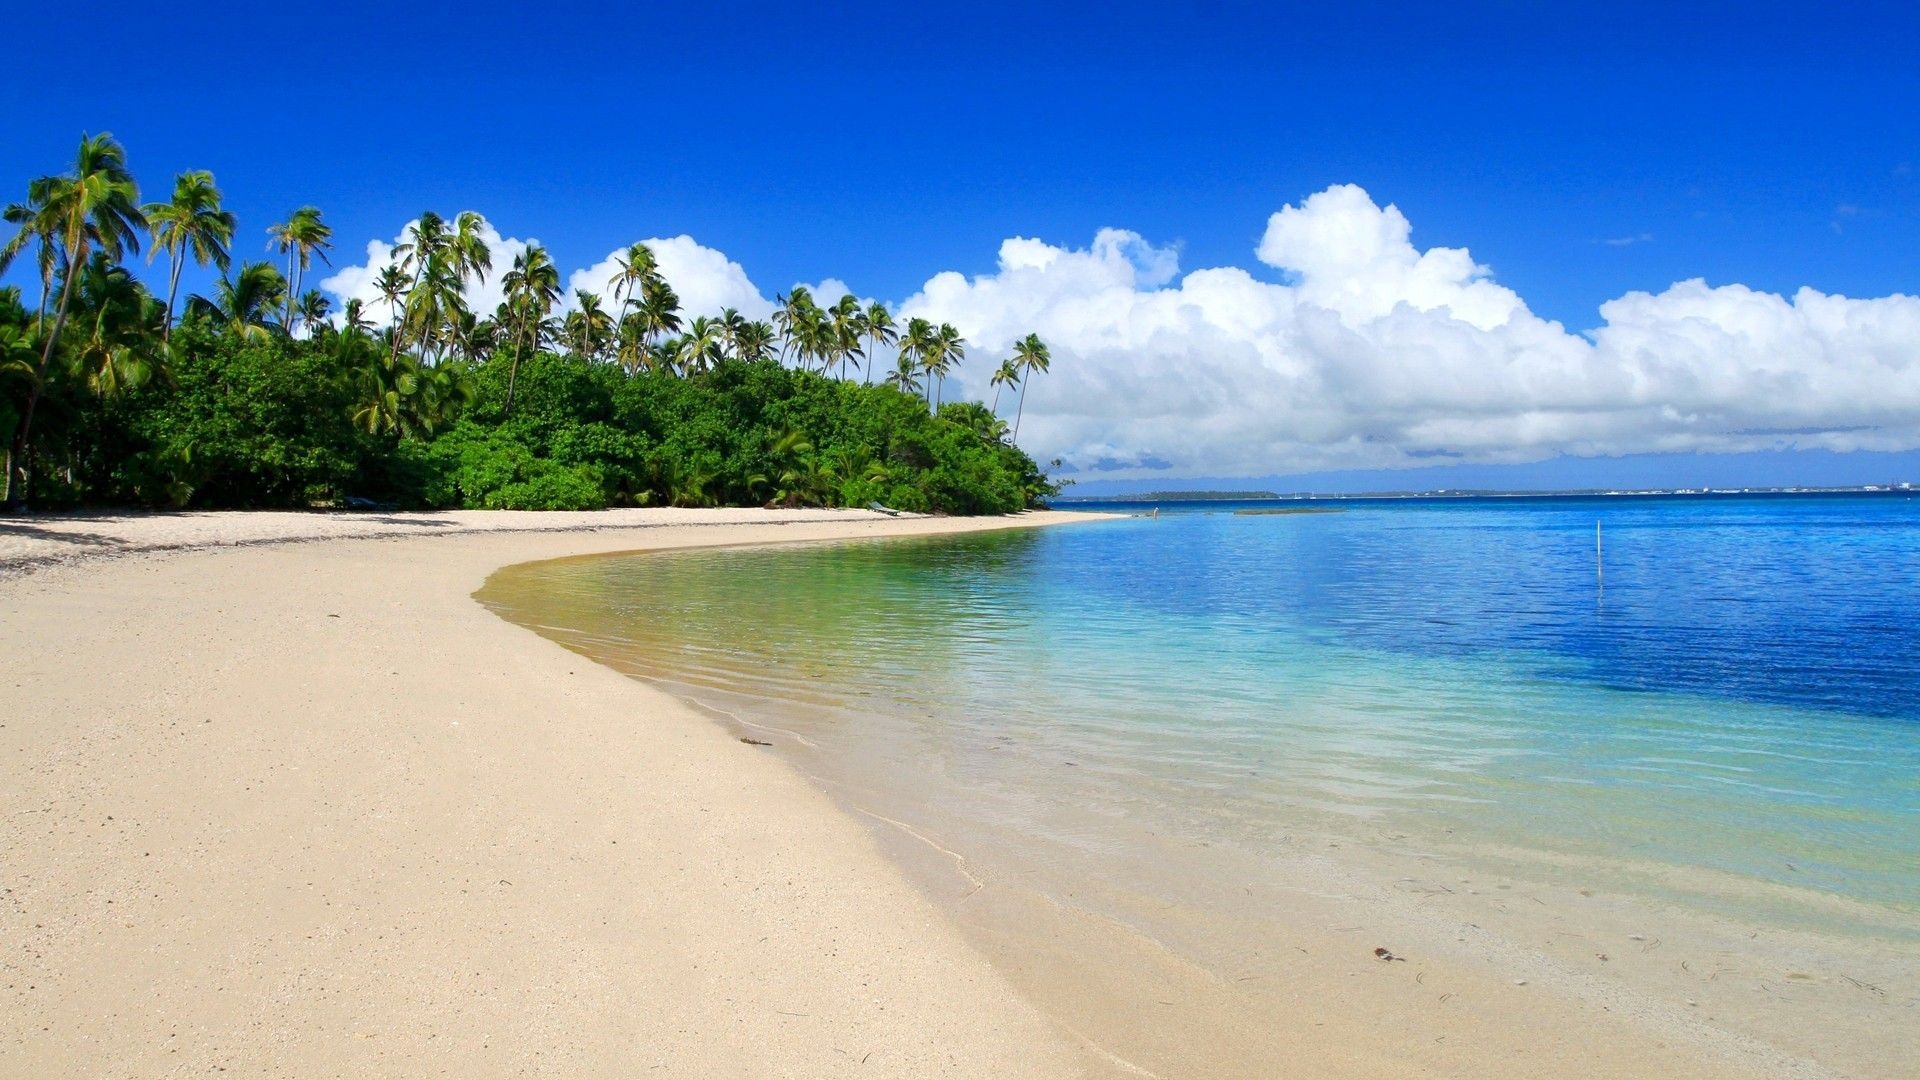 Tonga travels, Morning beach, Serene landscape, Peaceful atmosphere, 1920x1080 Full HD Desktop